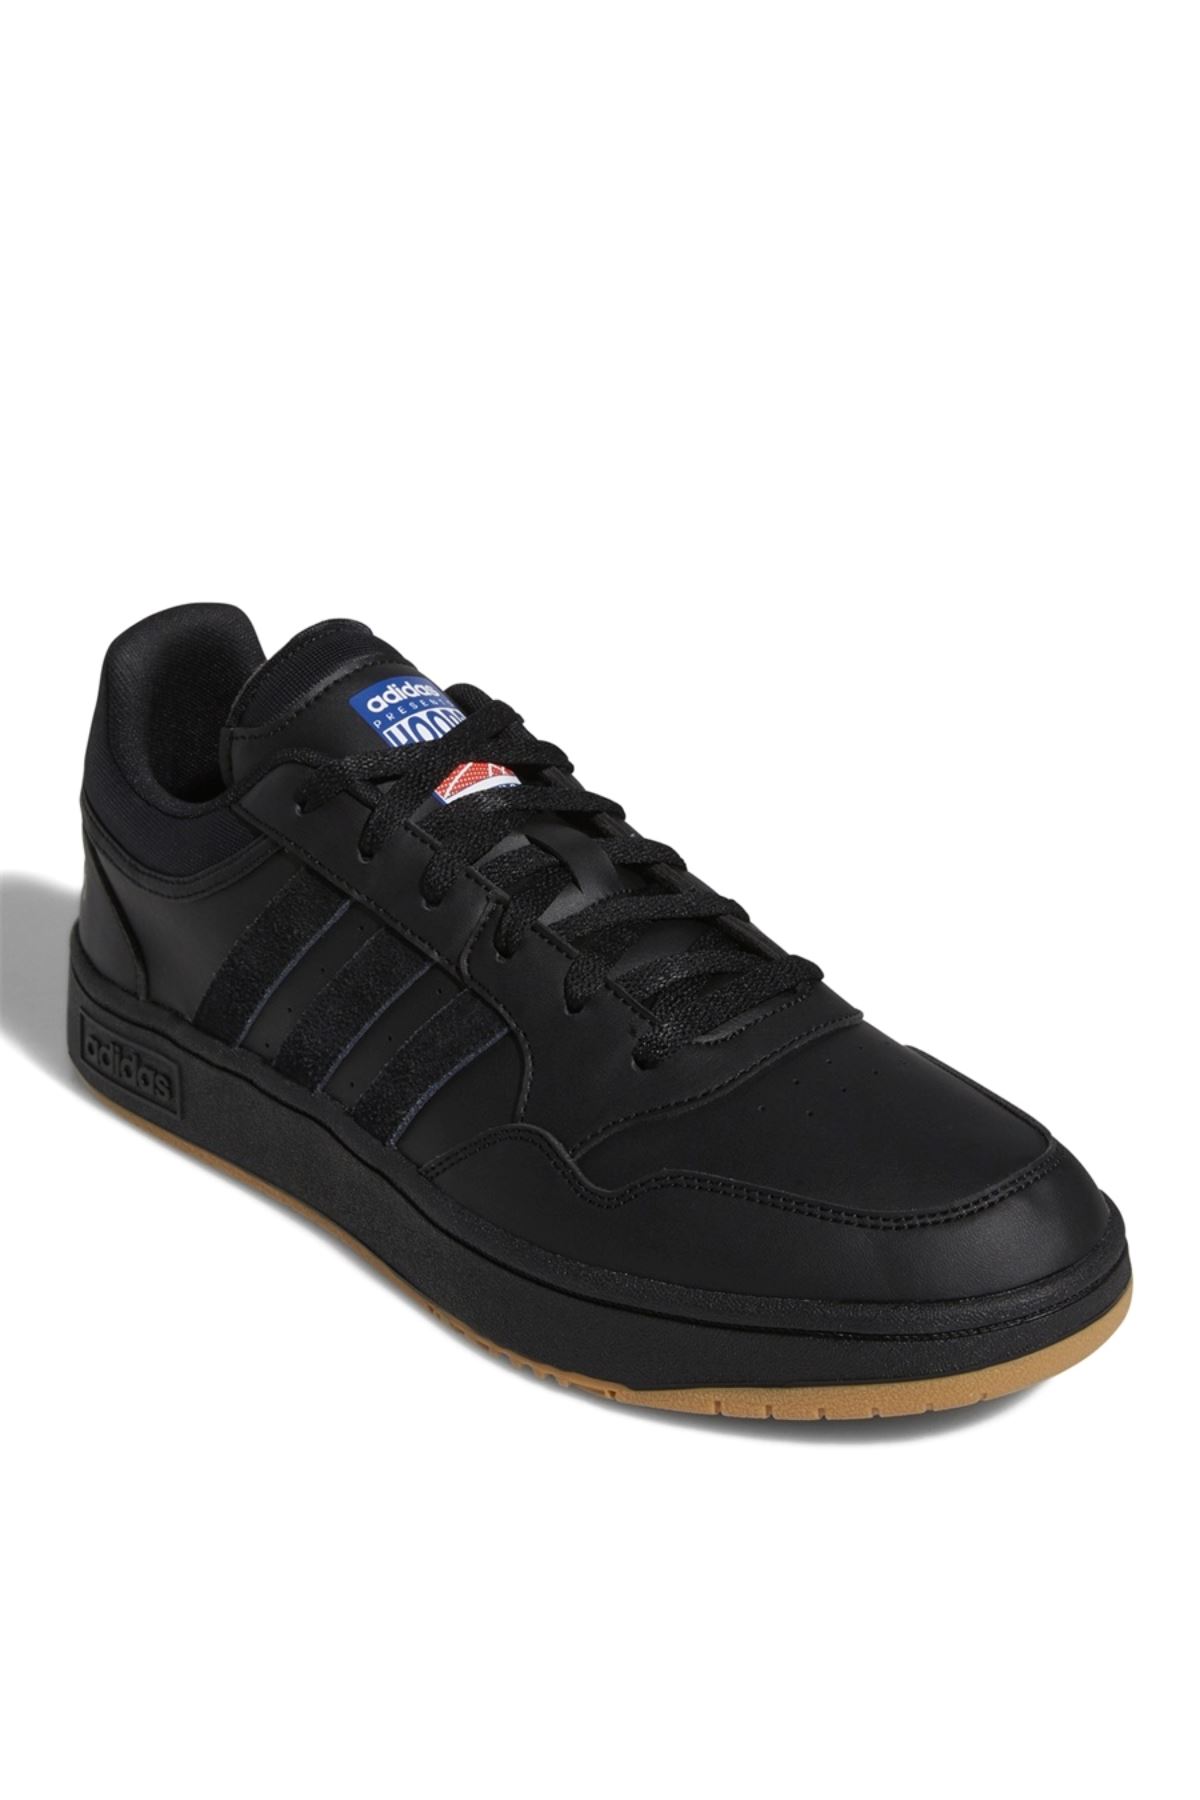 Adidas Hoops 3.0 Erkek Siyah Spor Ayakkabı - GY4727